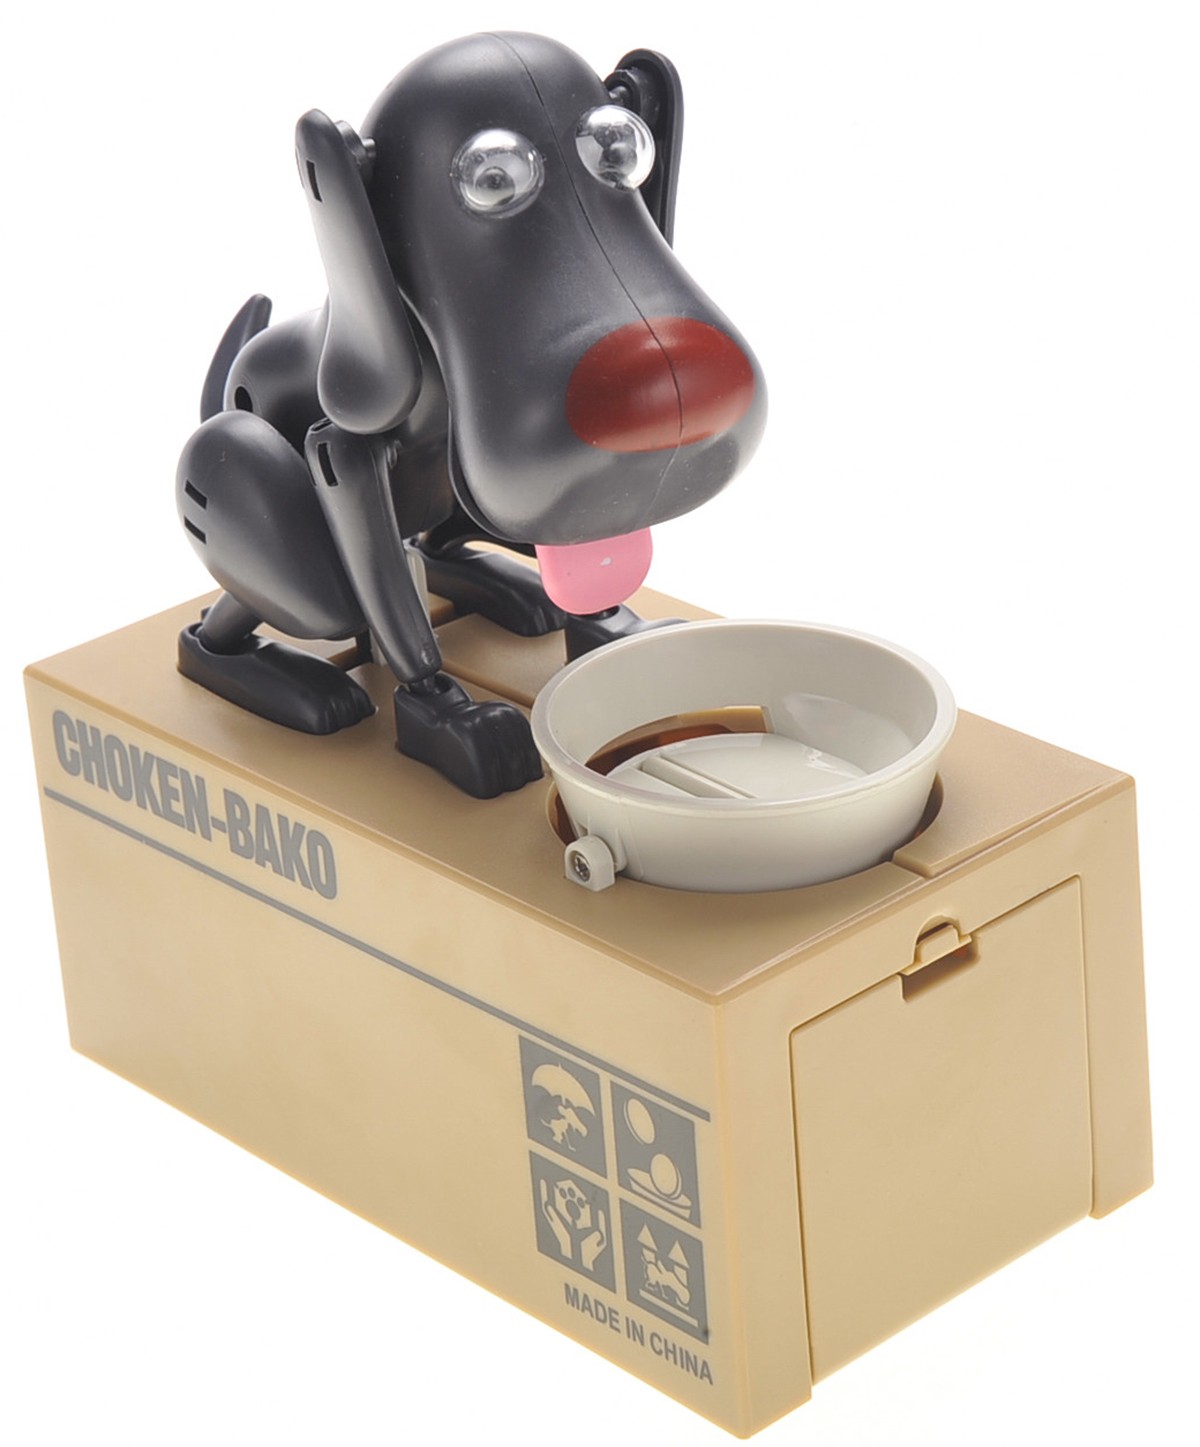 My Dog Piggy Bank - Robotic Coin Munching Toy Money Box (Black)